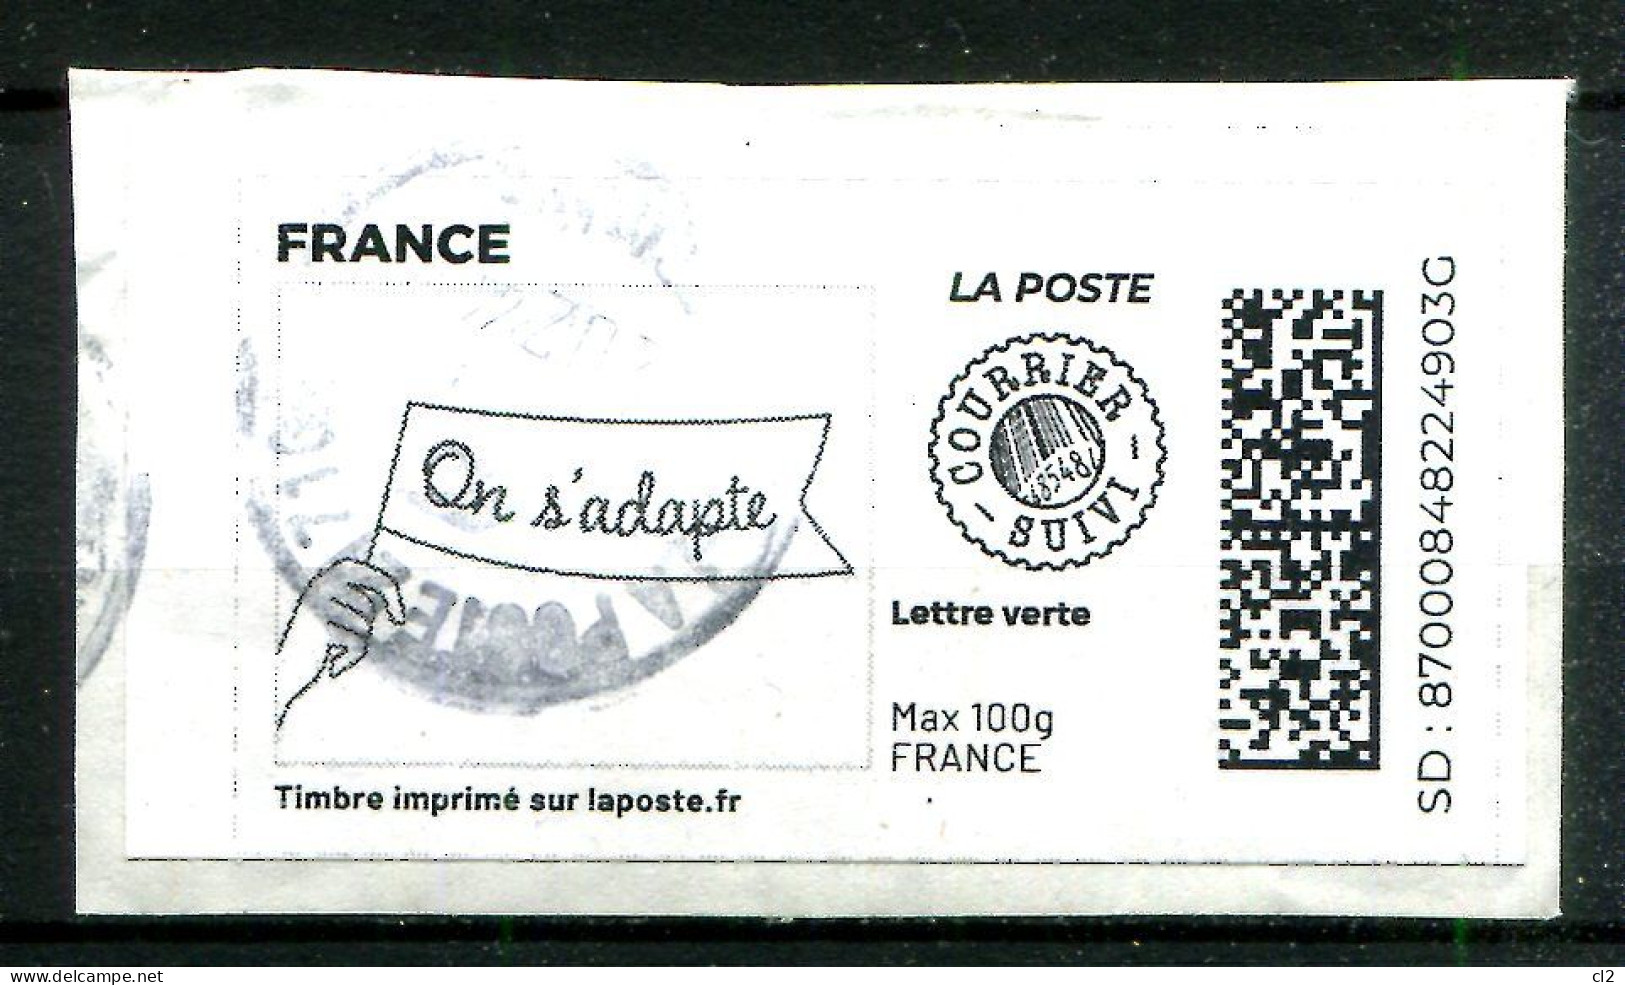 FRANCE - Timbre à Imprimer - Lettre Verte Suivie Max 100g - On S'adapte - Druckbare Briefmarken (Montimbrenligne)